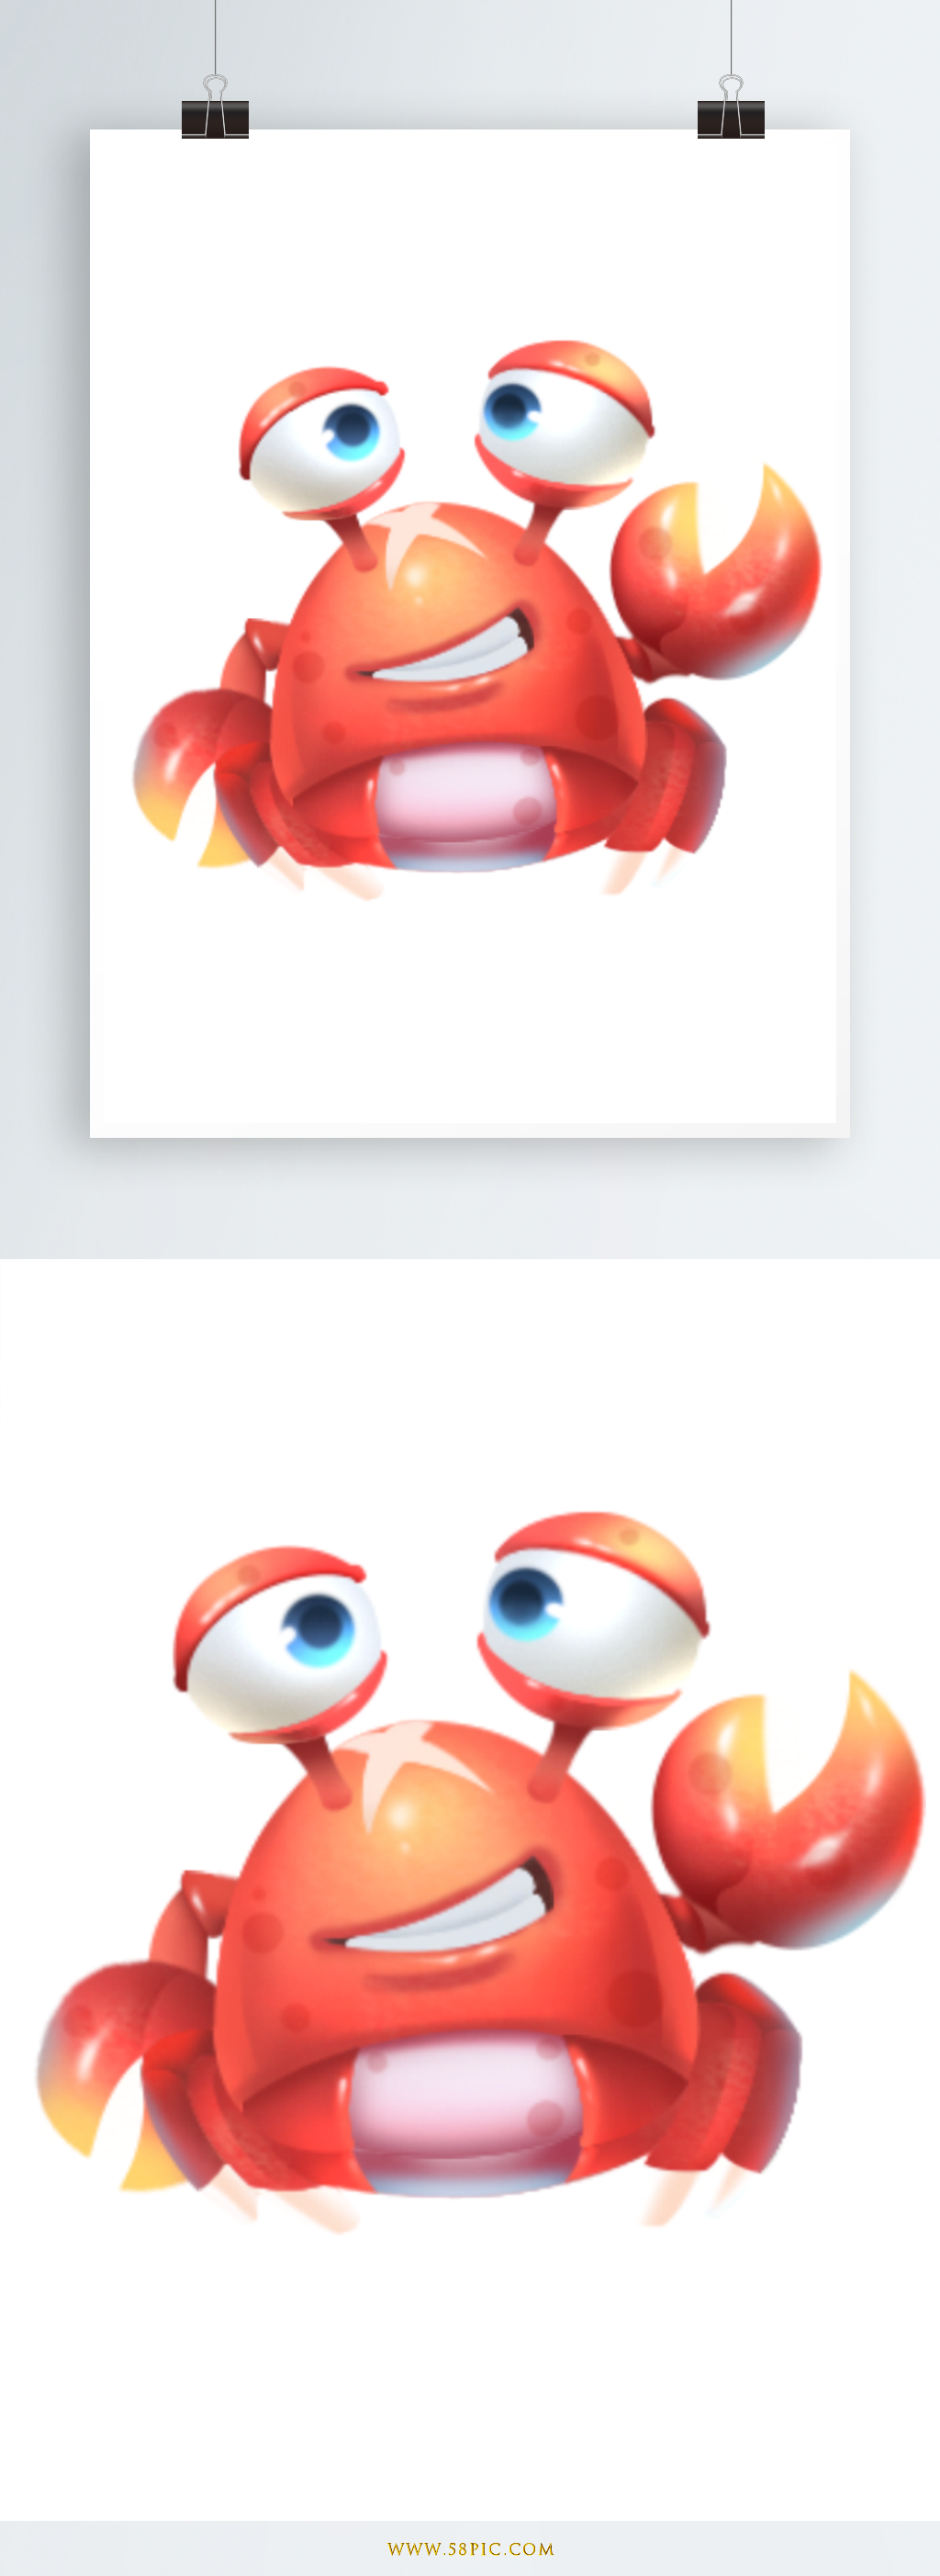 Original Illustration Cartoon Crab Drawing PNG Transparent Image And  Clipart Image For Free Download - Lovepik | 733583657